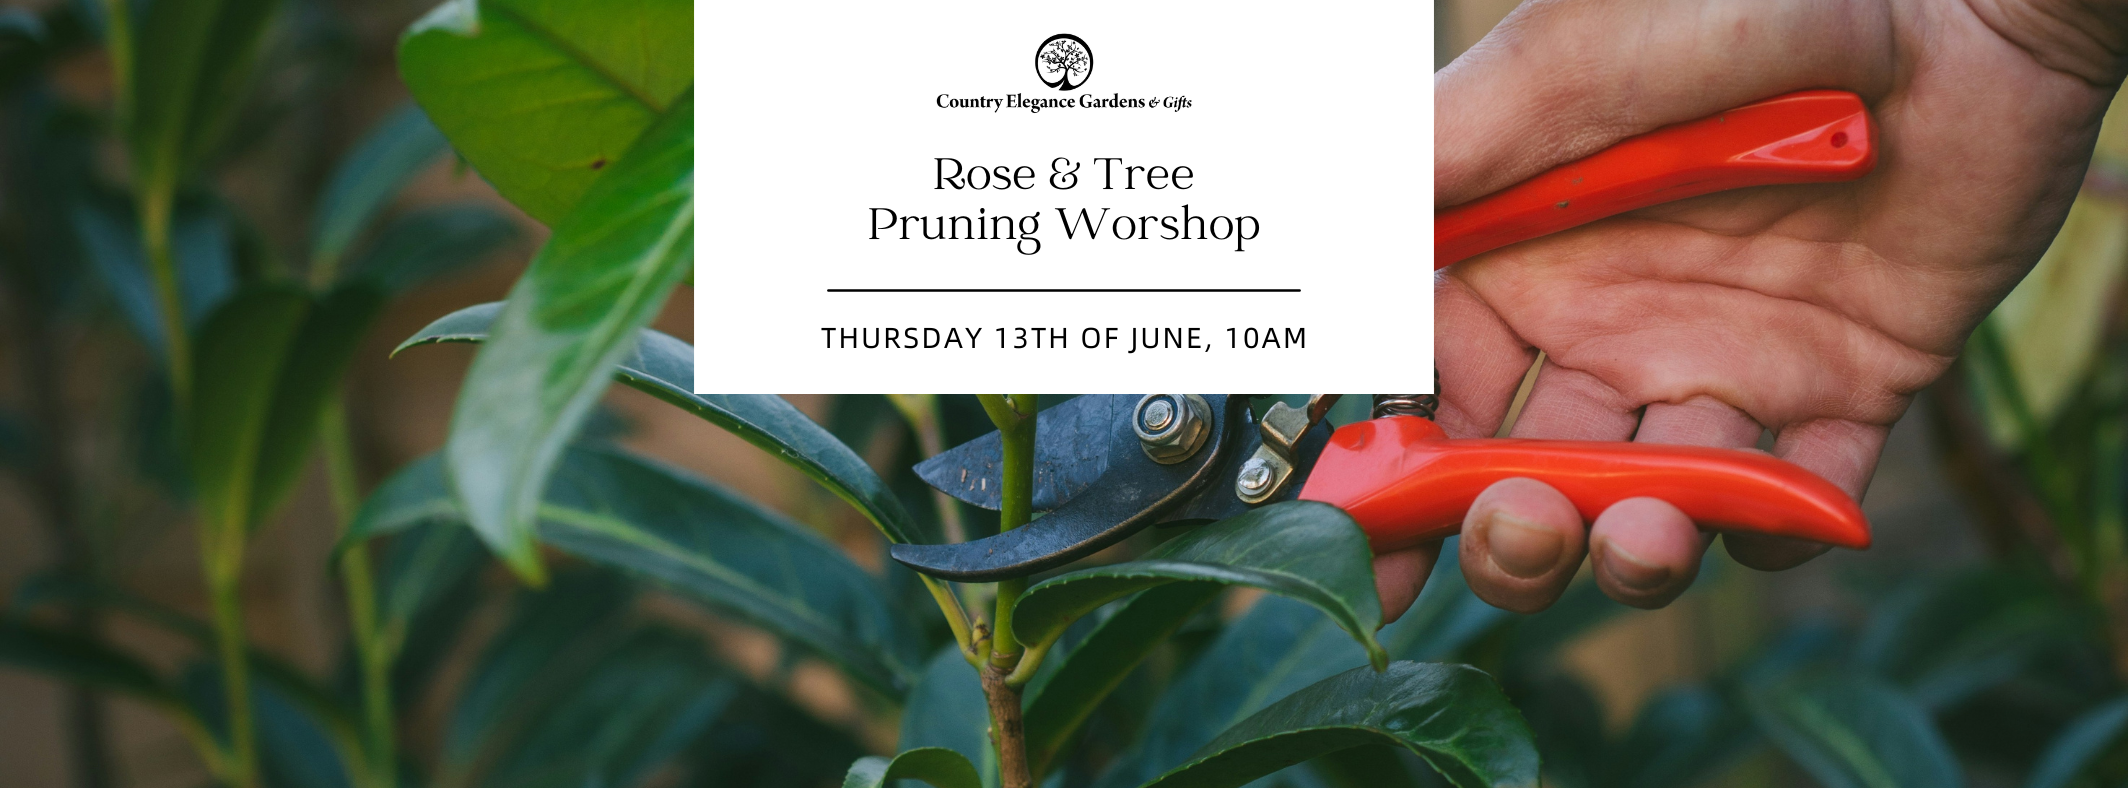 CE_pruning_workshop_FB_banner.png